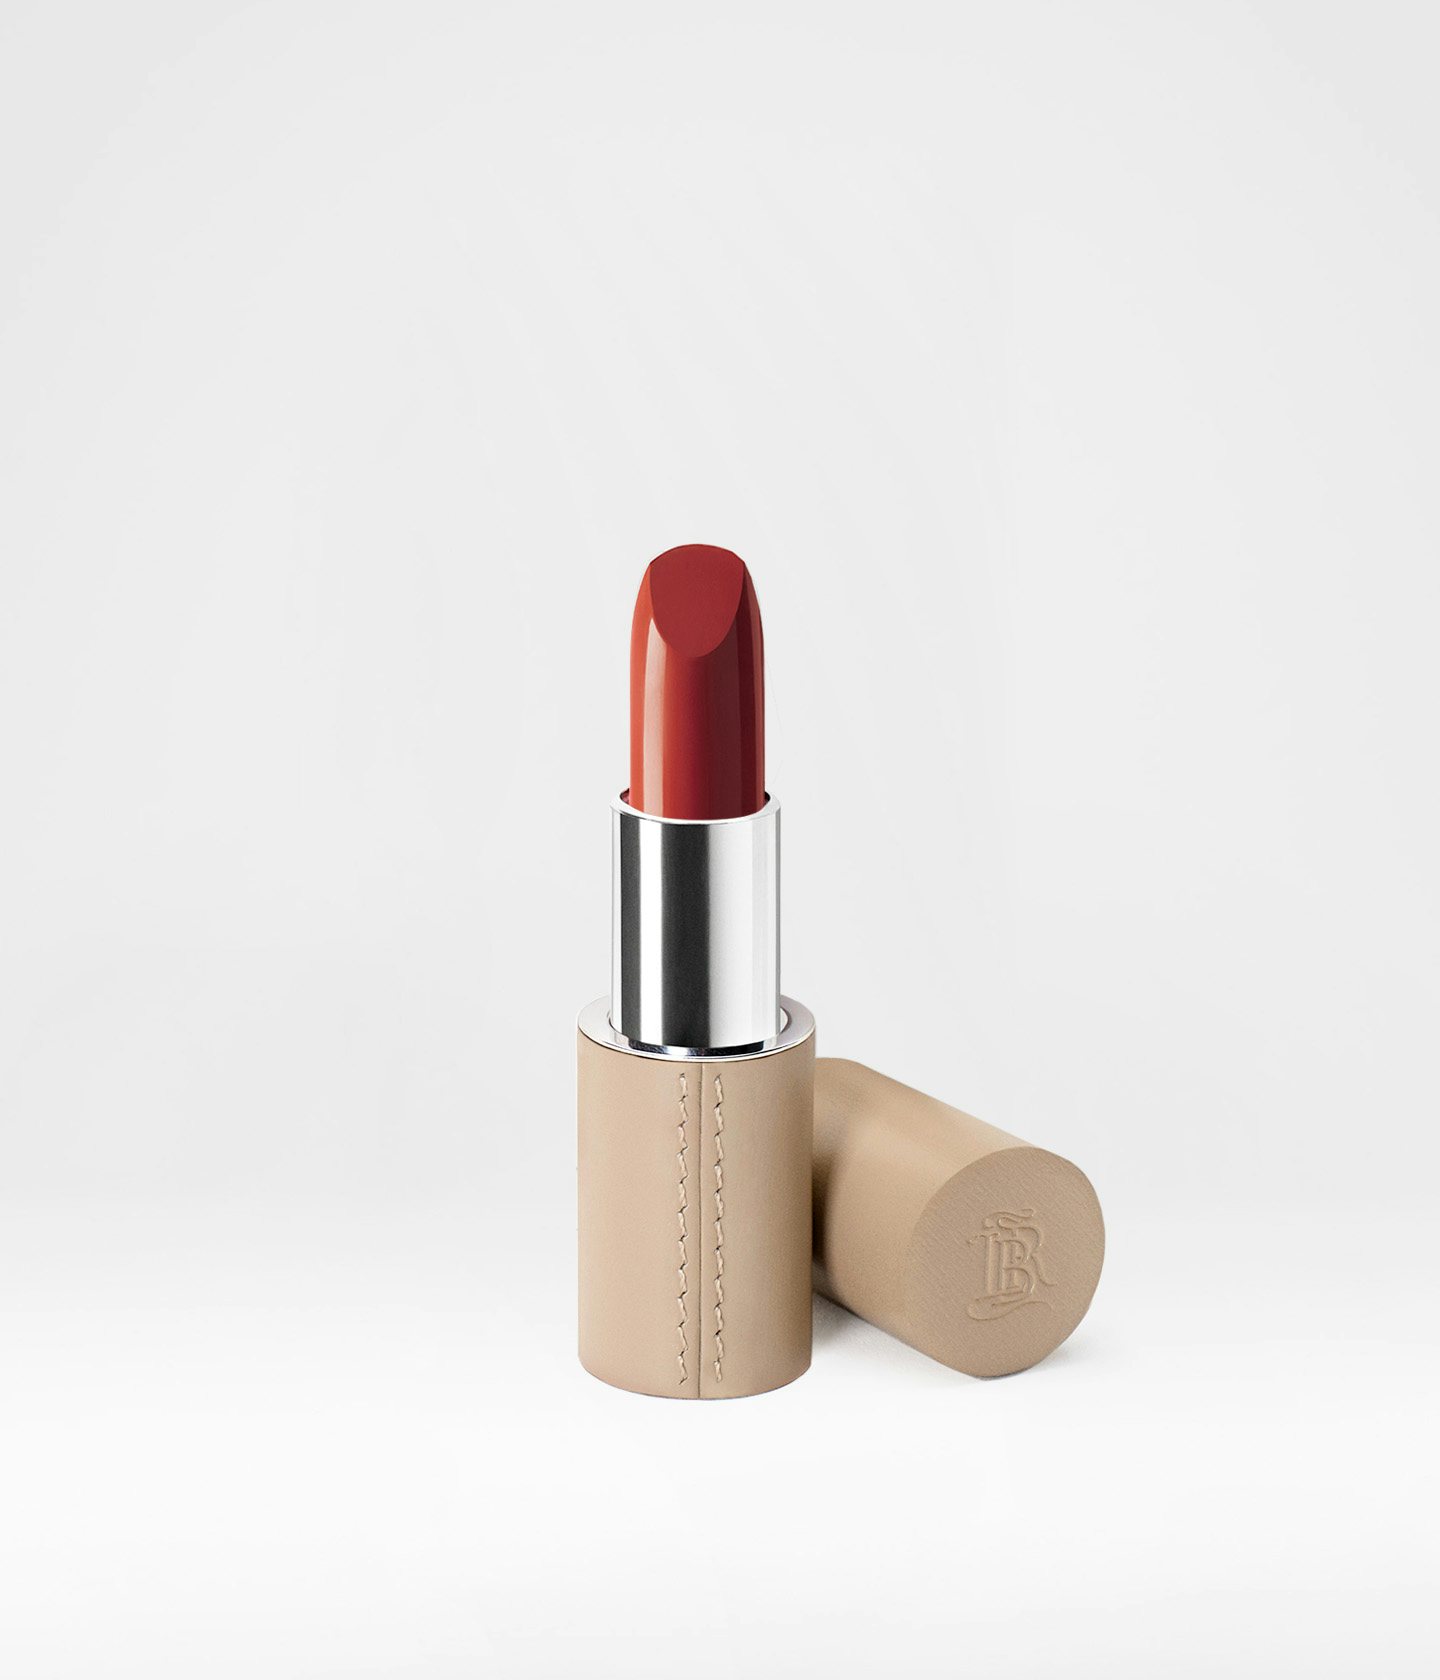 La bouche rouge iconic Nude Red lipstick